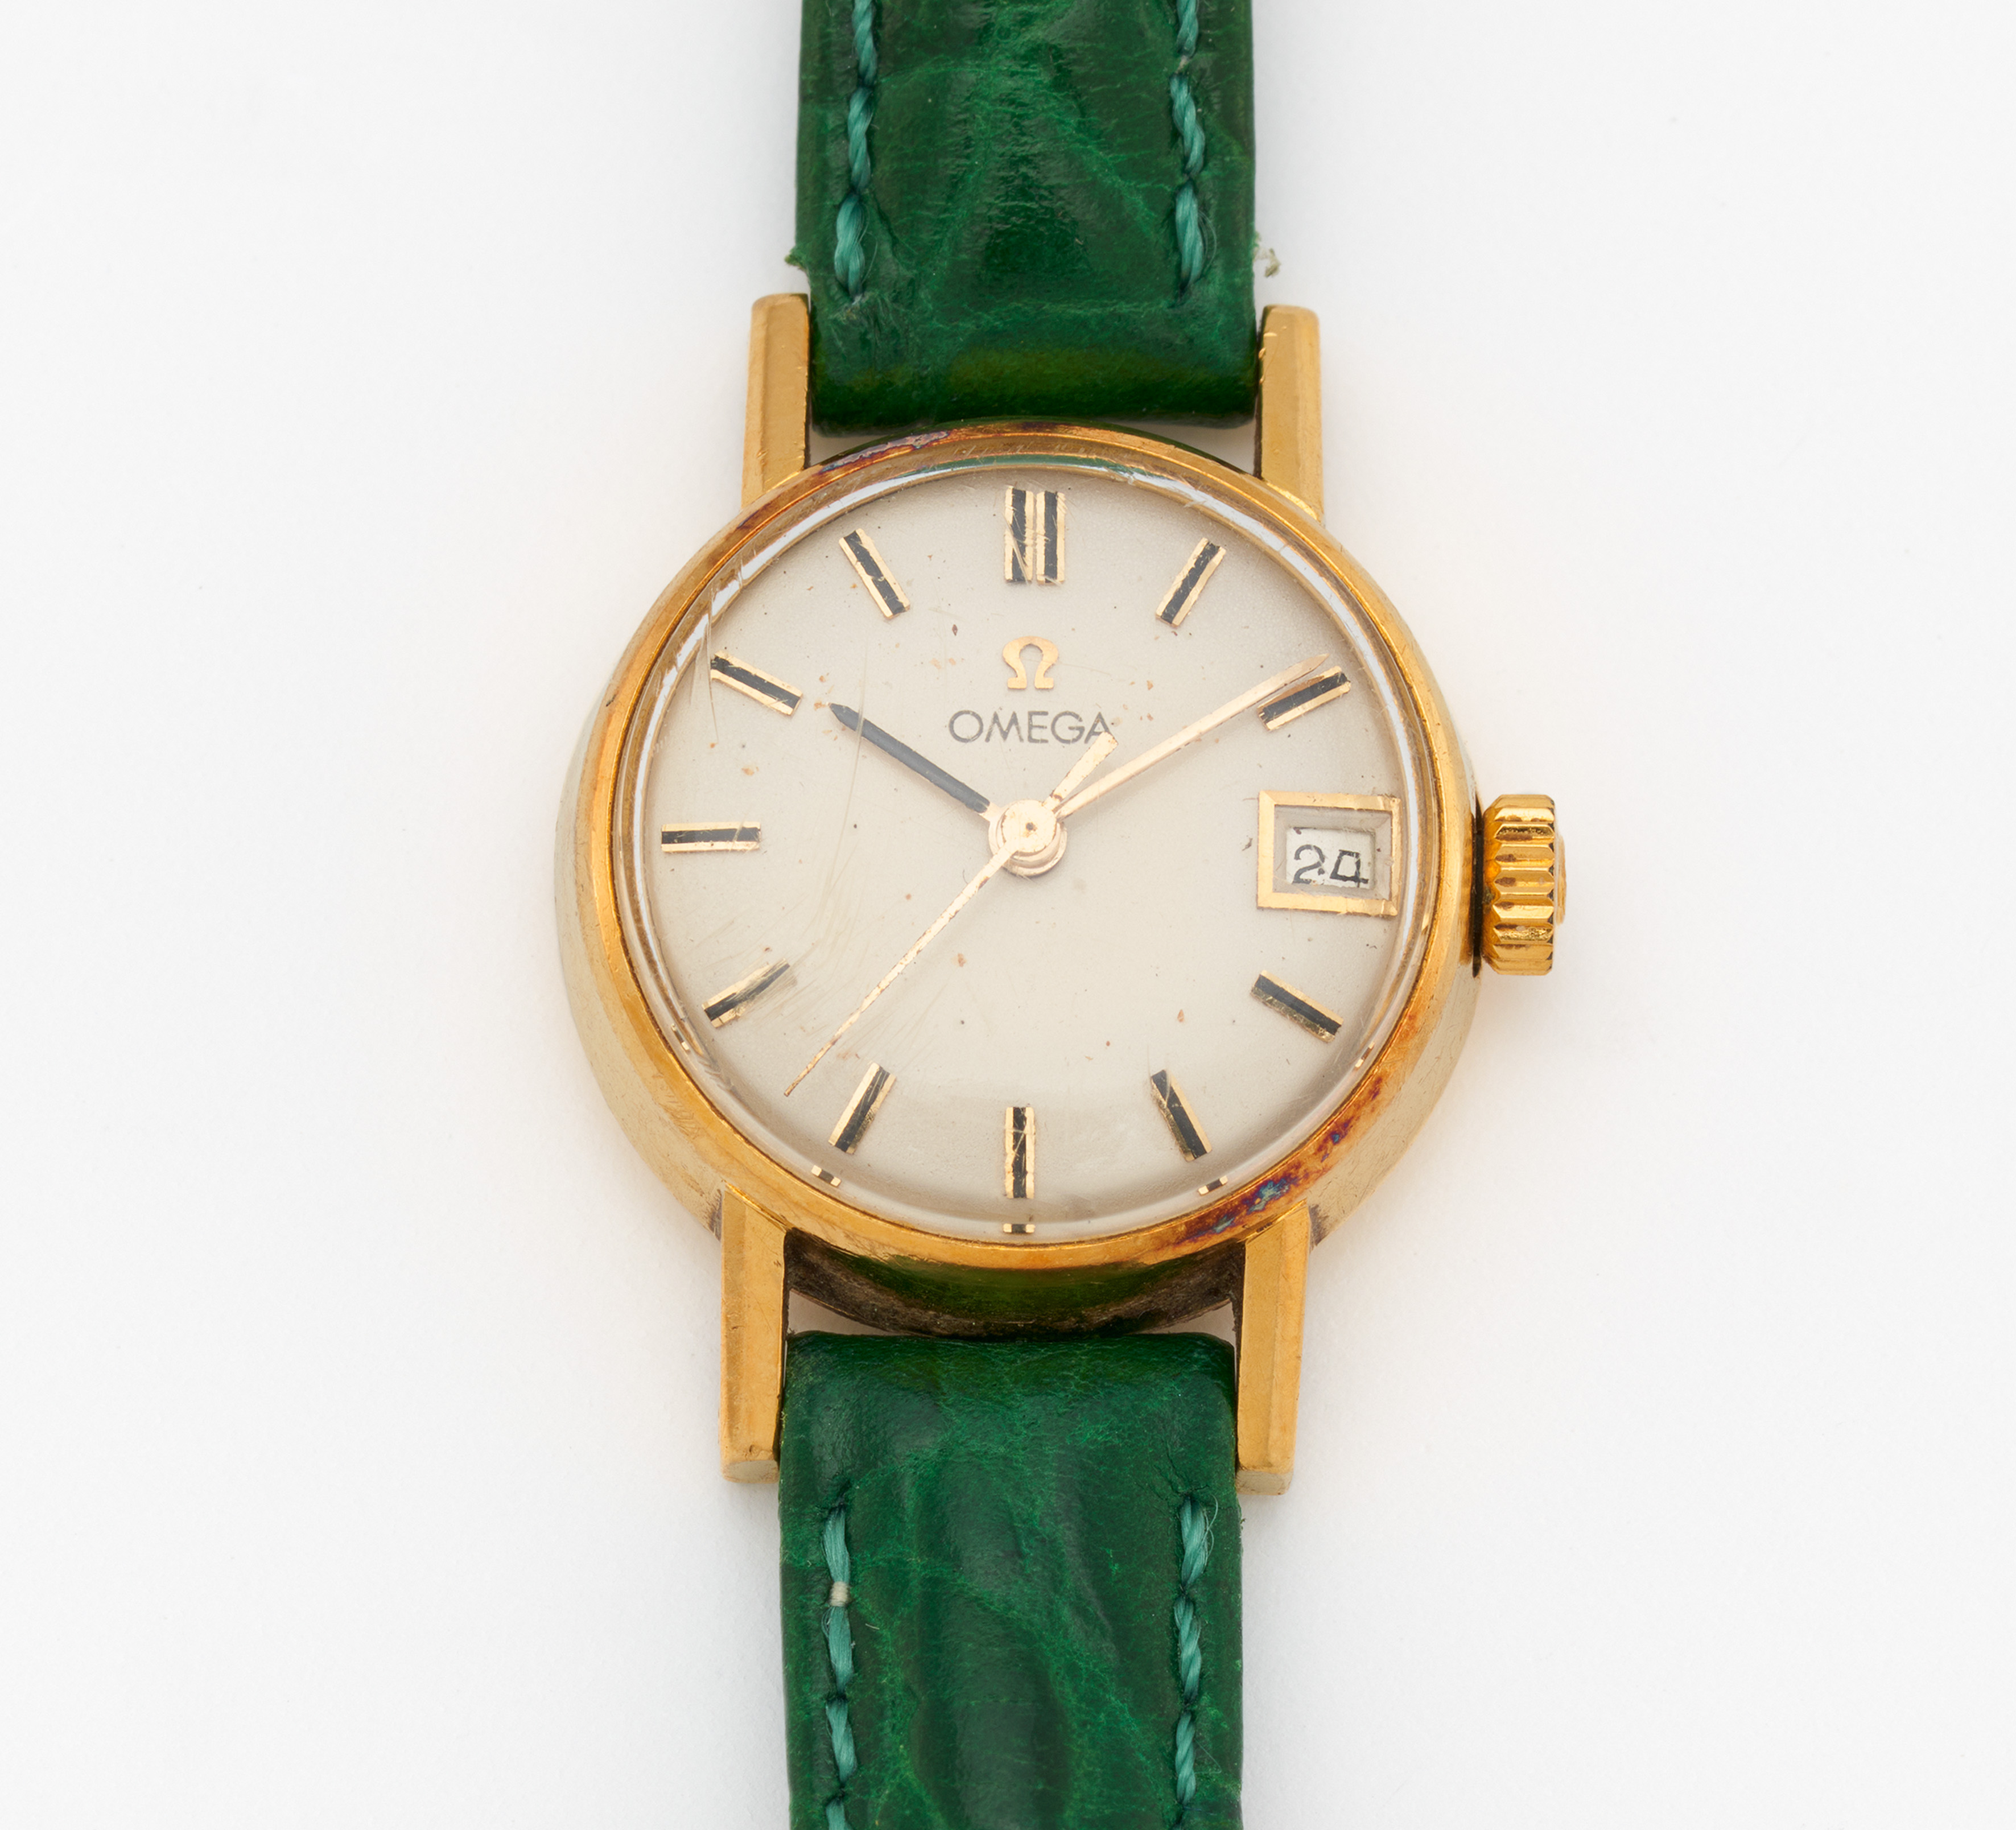 Omega - Armbanduhr, 74071-5, Van Ham Kunstauktionen